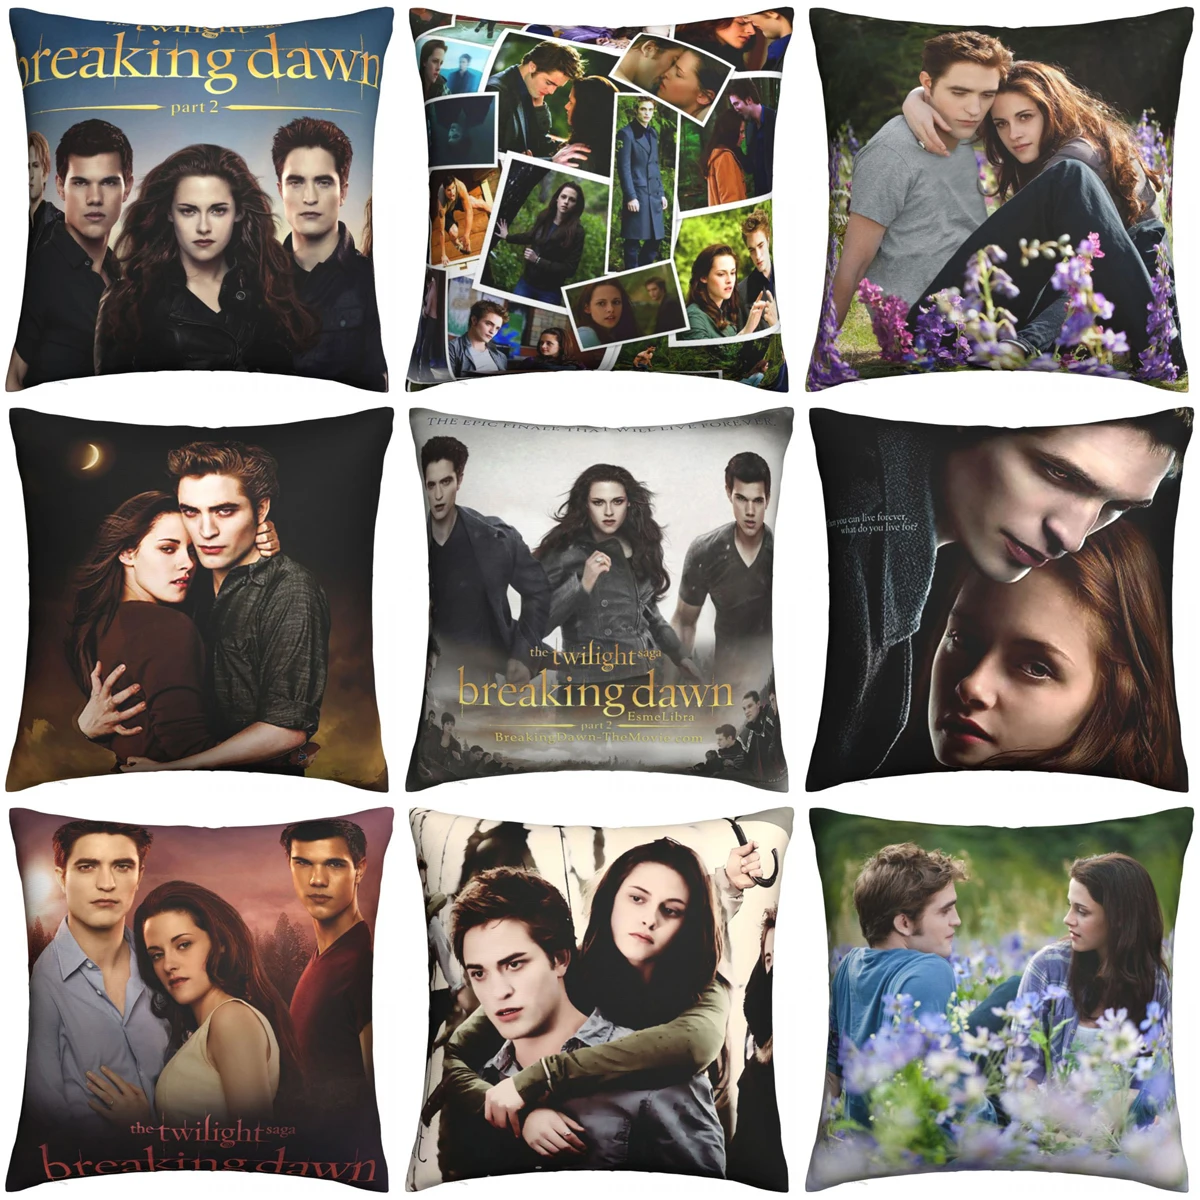 

The Twilight Saga Breaking Dawn Pillowcase Polyester Cushion Cover Decor Movie Edward Bella Jacob Black Pillow Case Cover Home